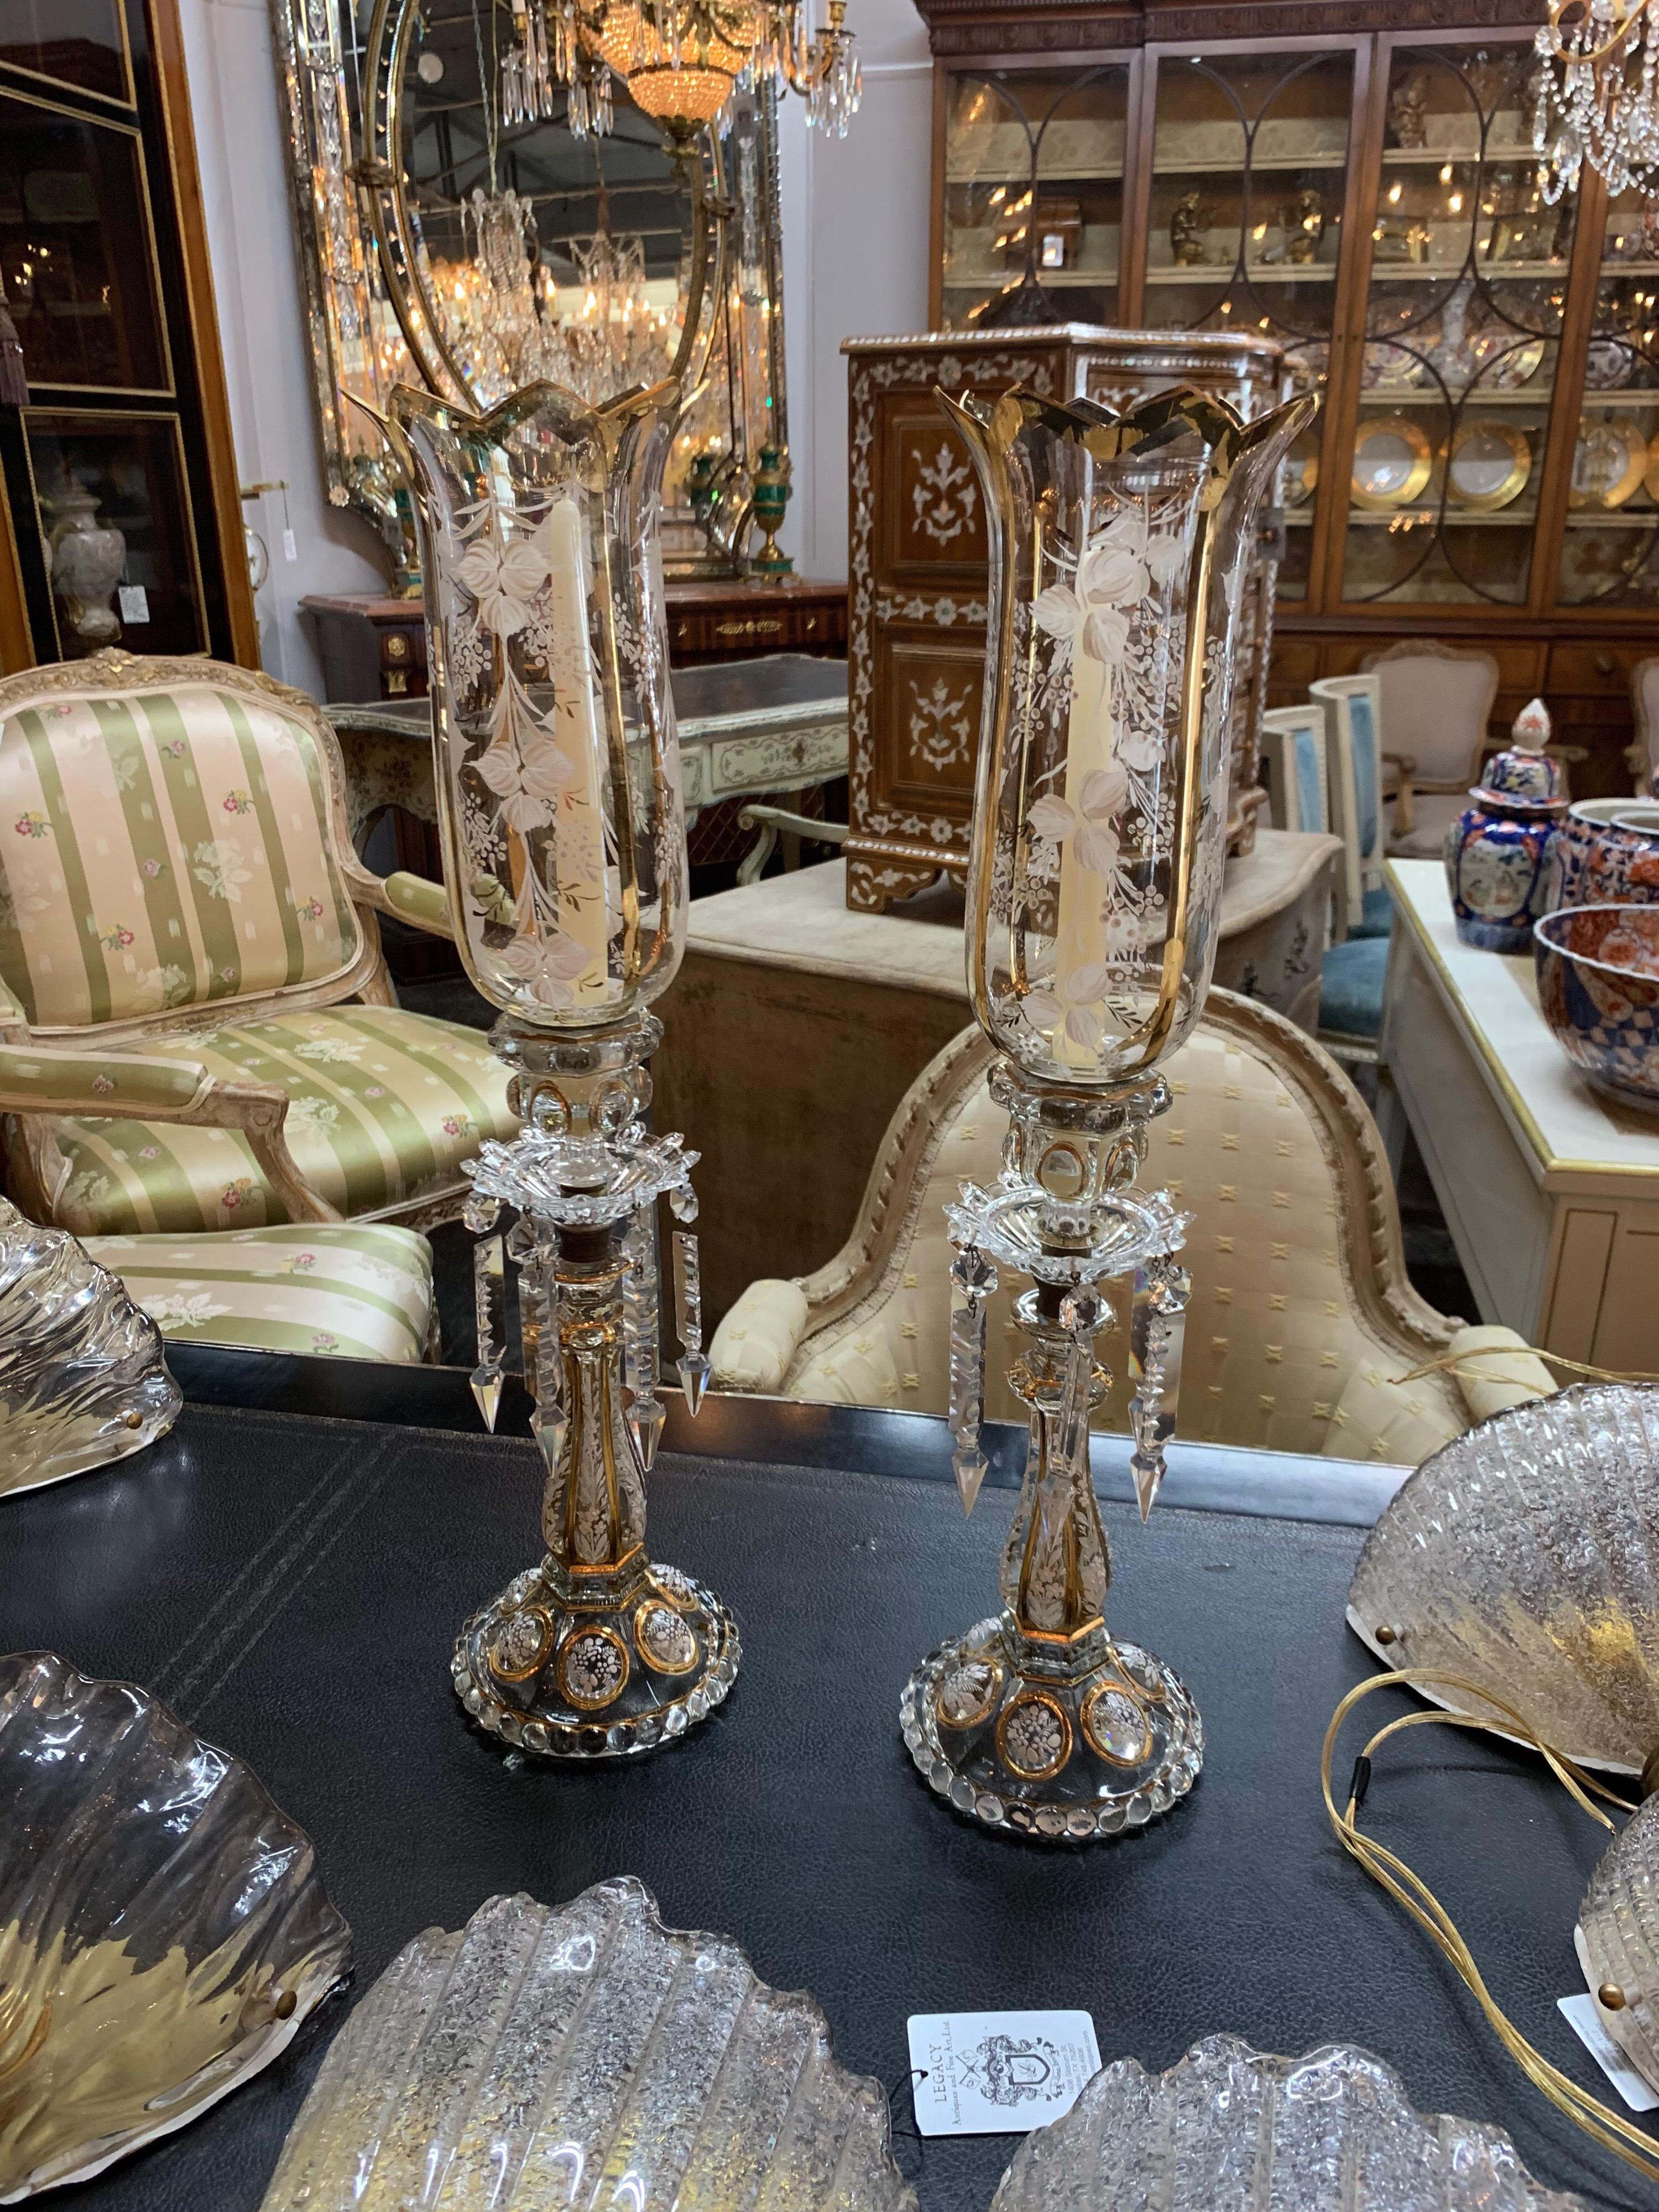 vintage crystal hurricane lamps